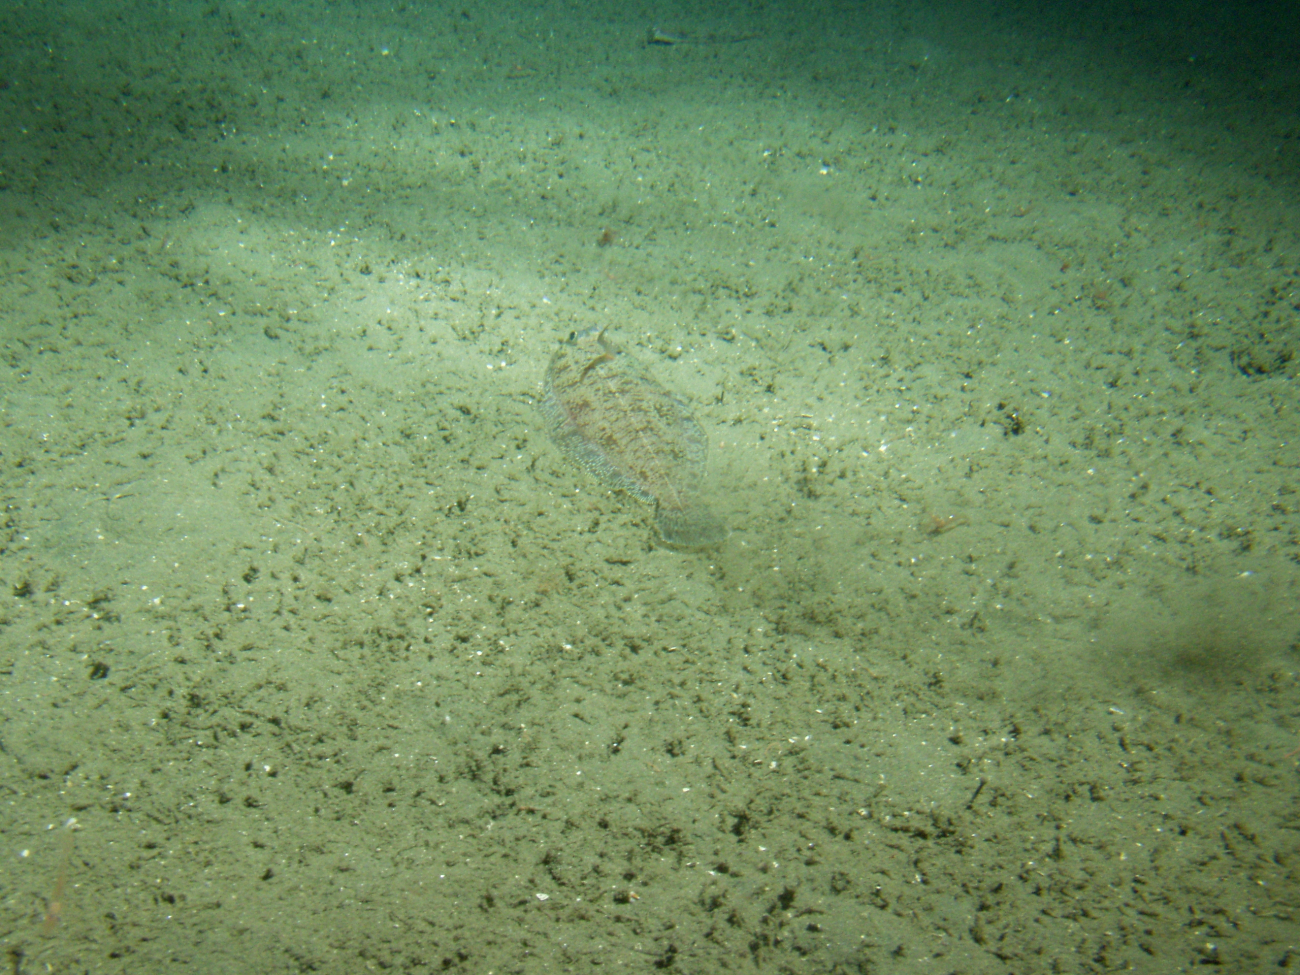 Flatfish on soft sediment of continental shelfat 150 meters depth